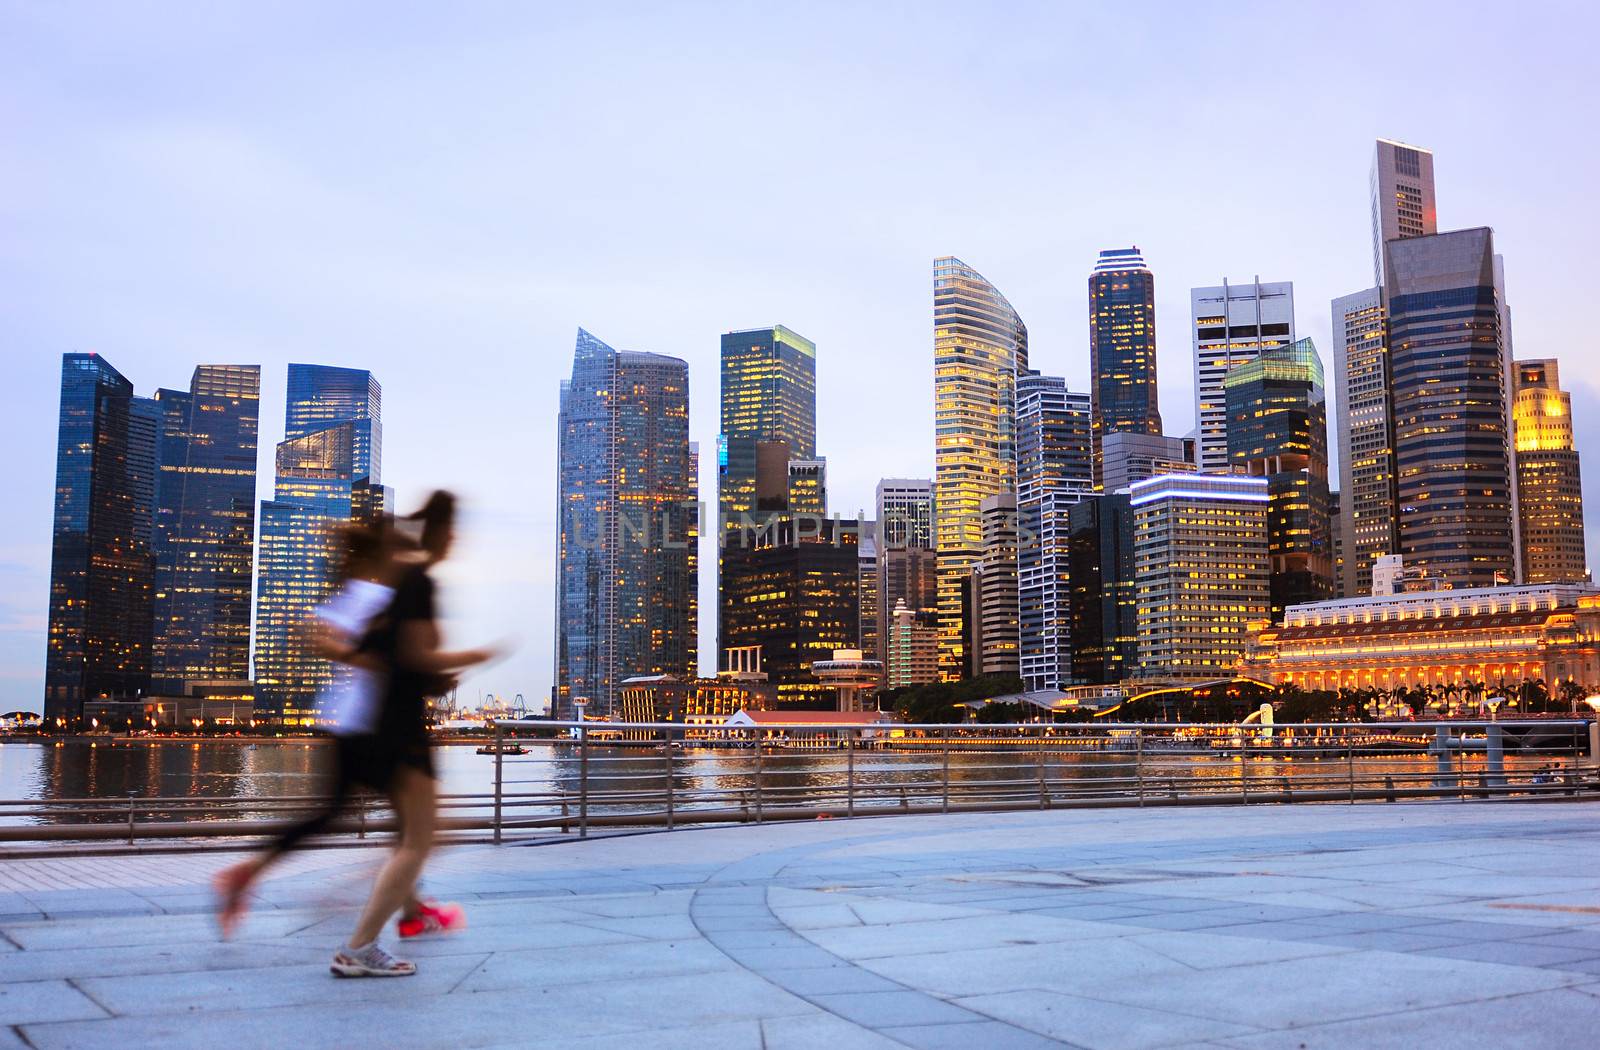 People jogging in Singapore by joyfull